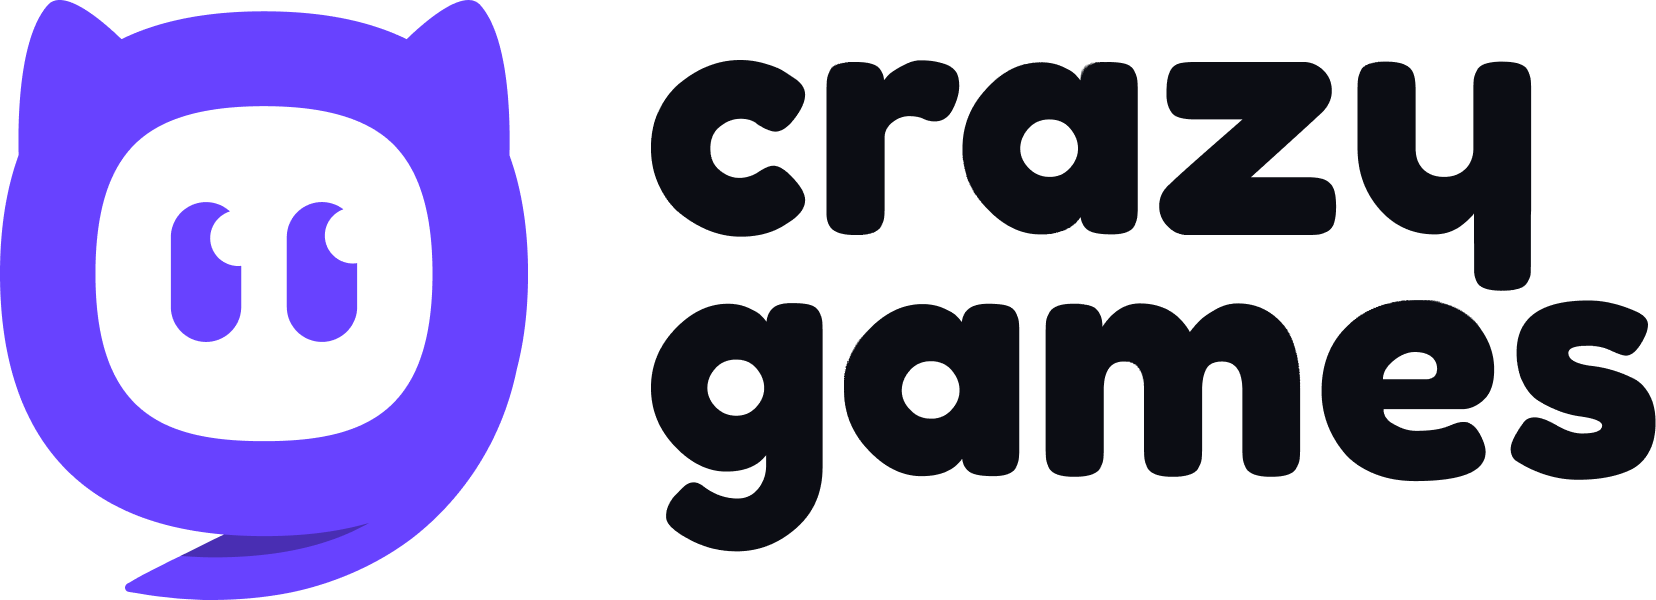 CrazyGames Developer Portal  Publish Unity and HTML5 web games and earn  revenue